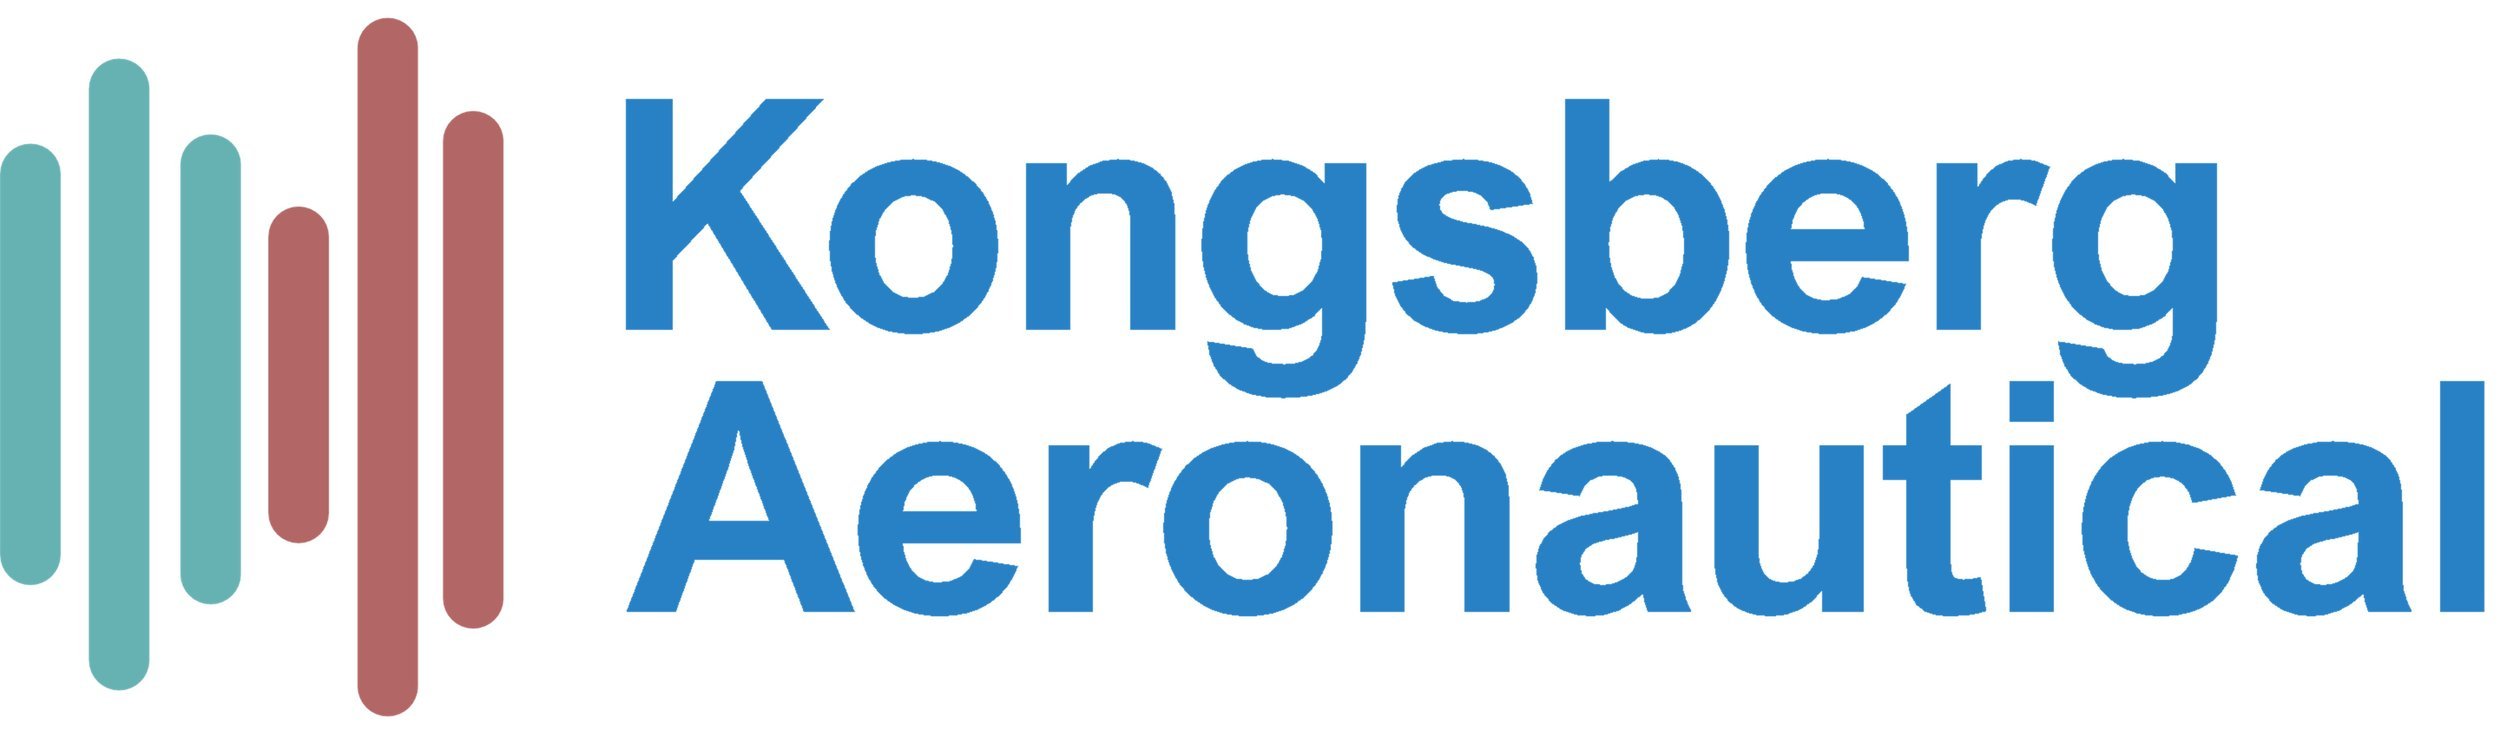 KONGSBERG+AERONAUTICAL+LOGO+VERTICAL.jpg